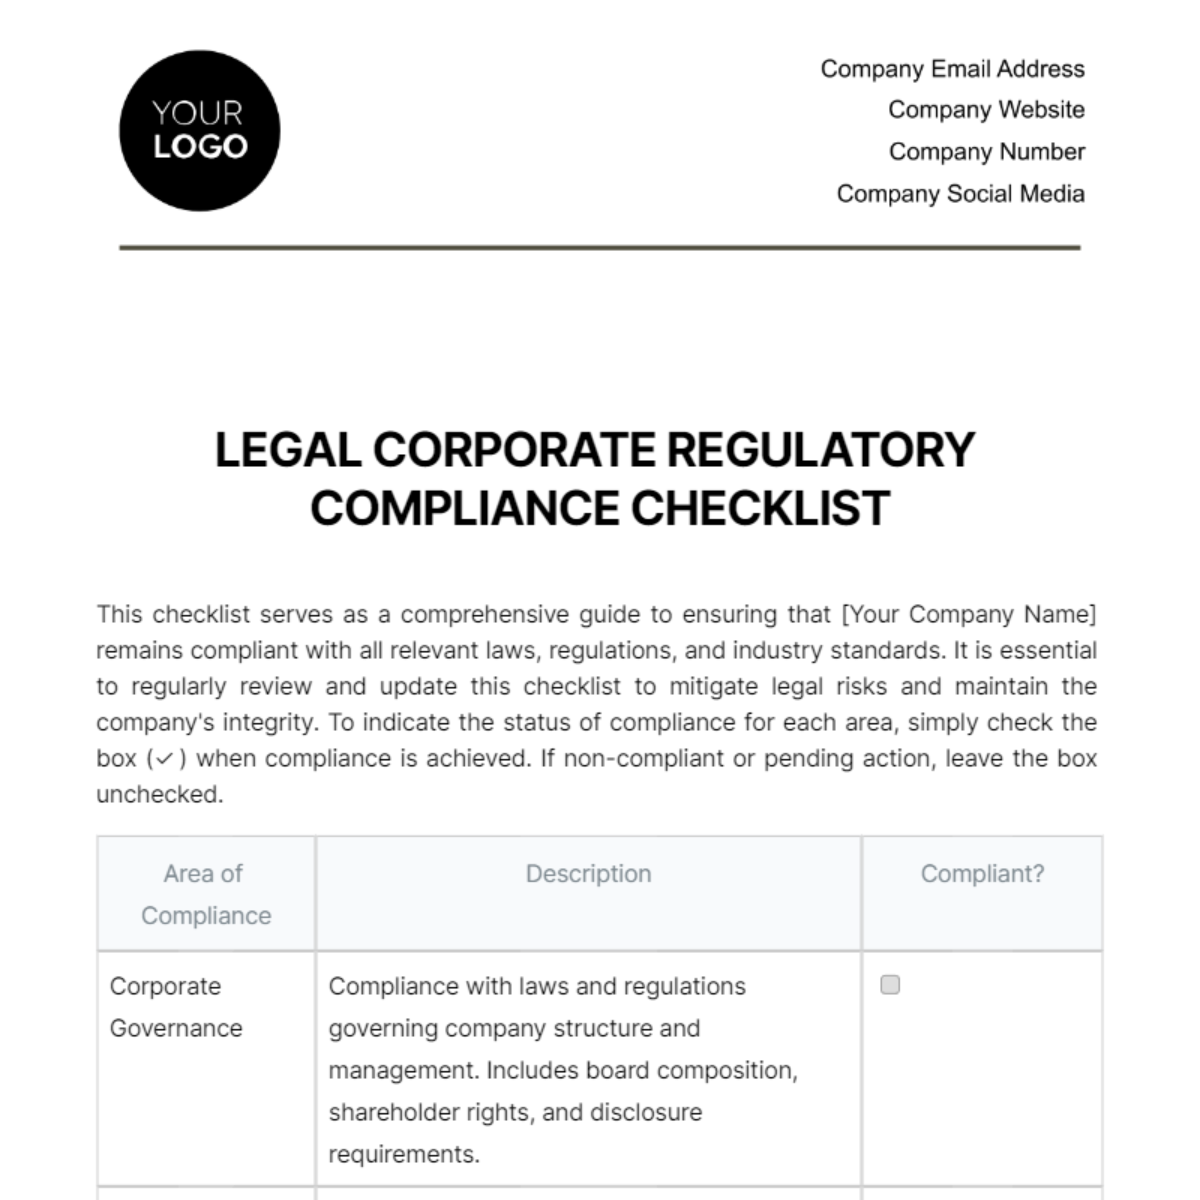 Legal Corporate Regulatory Compliance Checklist Template